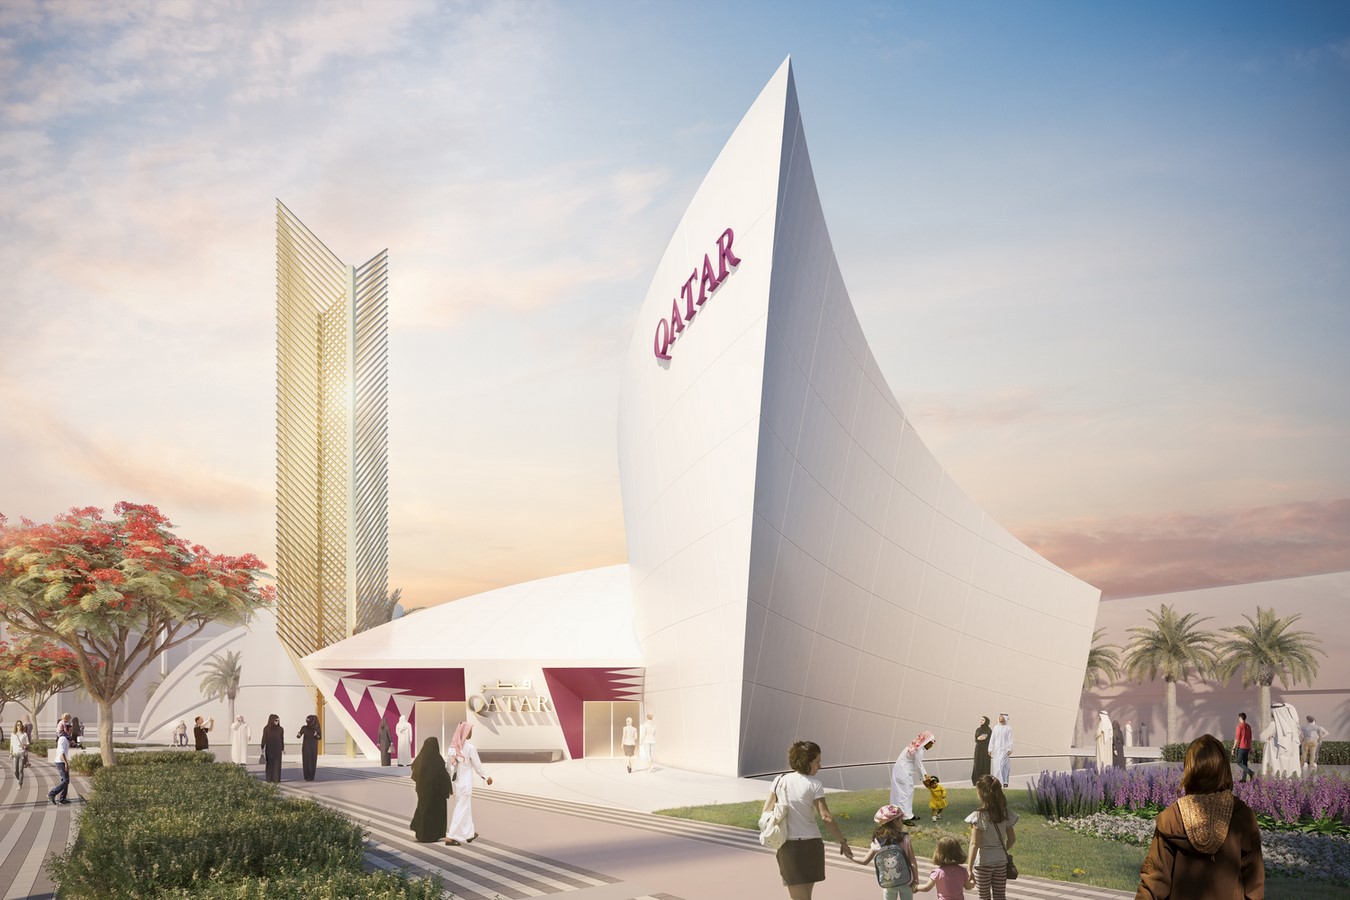 The Qatar Pavilion for the Expo 2020 Dubai design revealed by Santiago Calatrava - Sheet2